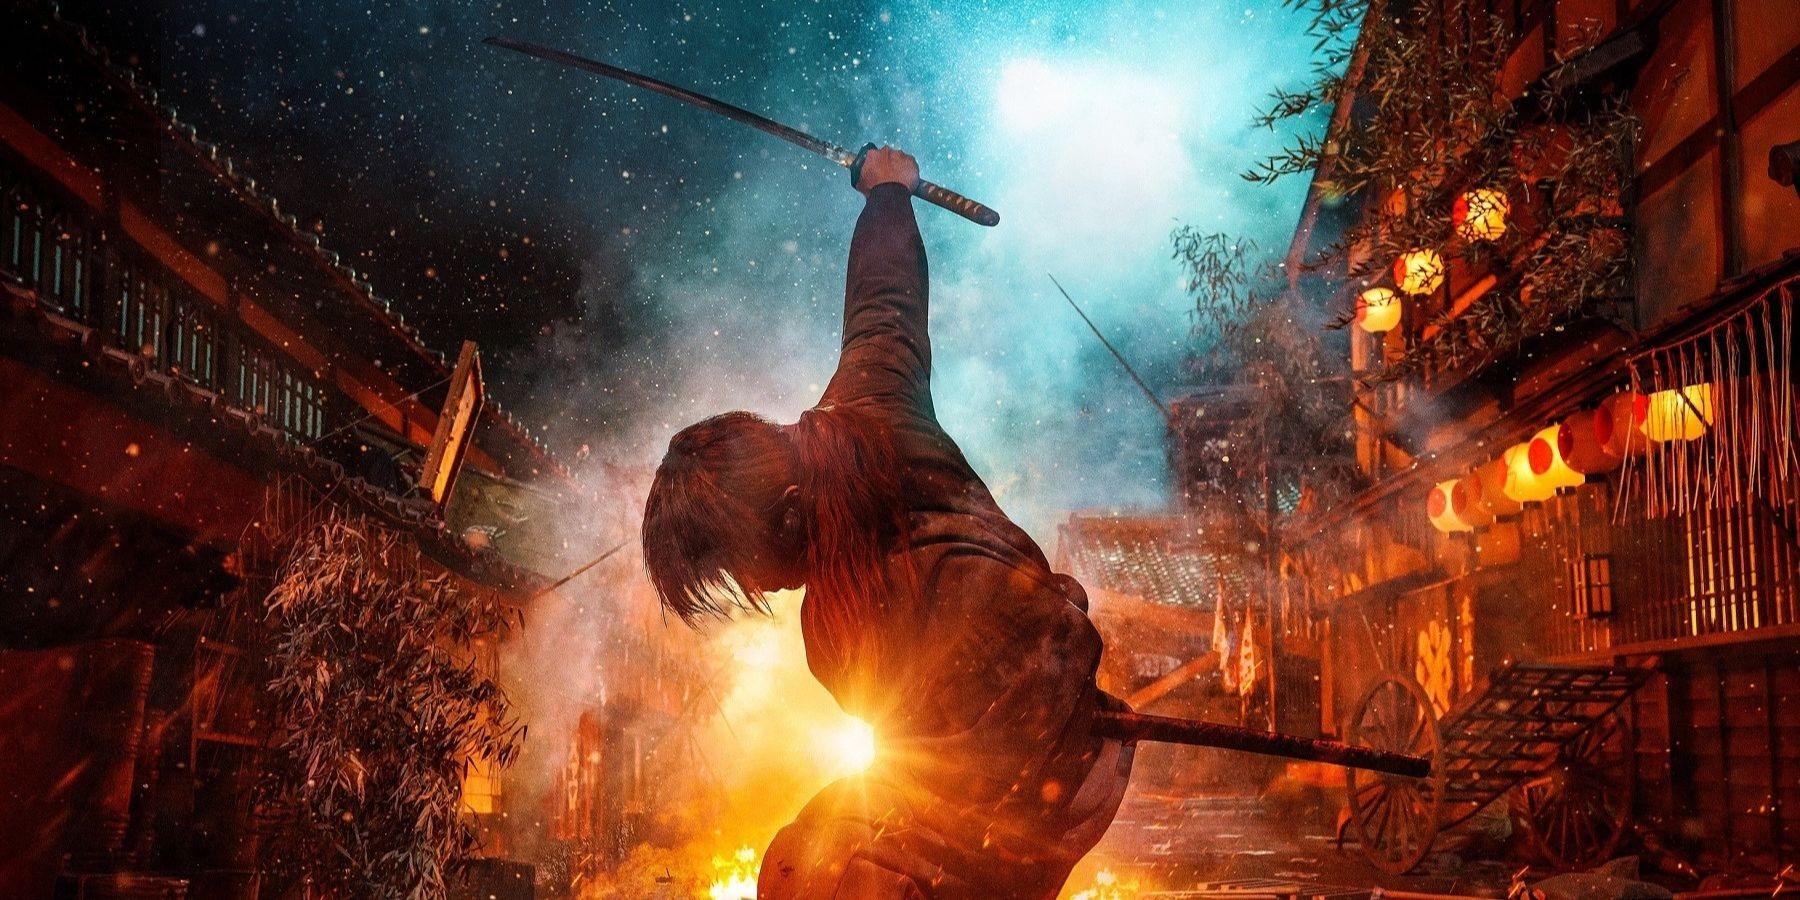 Rurouni Kenshin: The Final Film Reveals New Promo!, Movie News